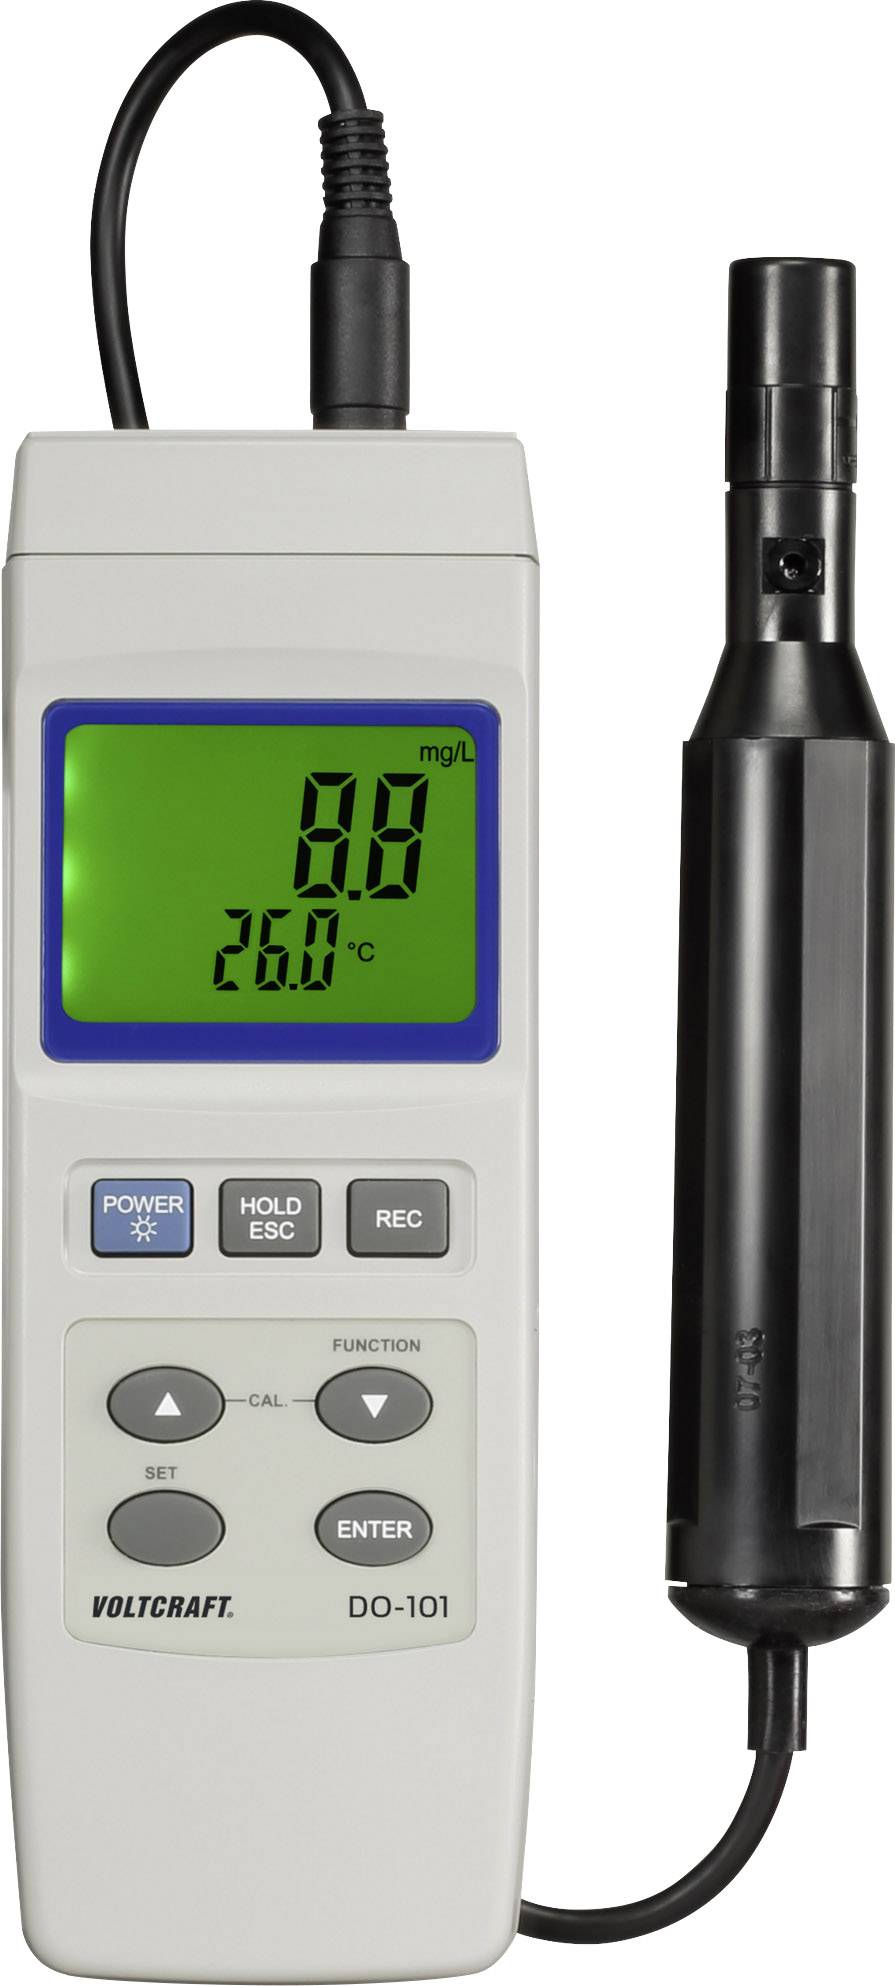 VOLTCRAFT DO-101 Sauerstoff-Messgerät 0 - 20 mg/l Wechselbare Elektrode, mit Temperaturmessfu